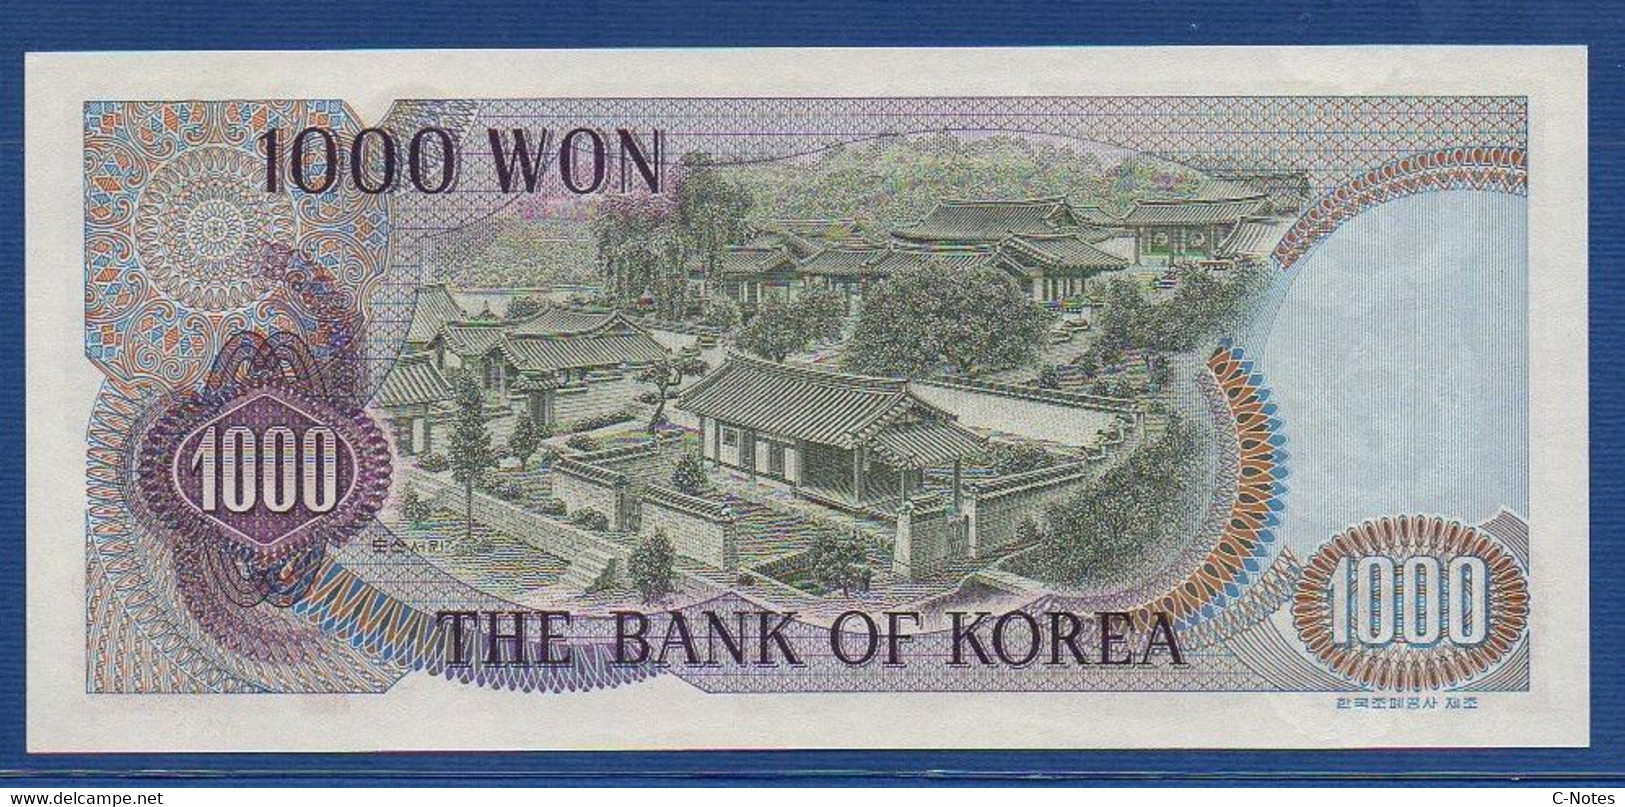 KOREA (SOUTH) - P.44 – 1000 Won ND (1975) UNC, Serie 2256139 - Korea, South